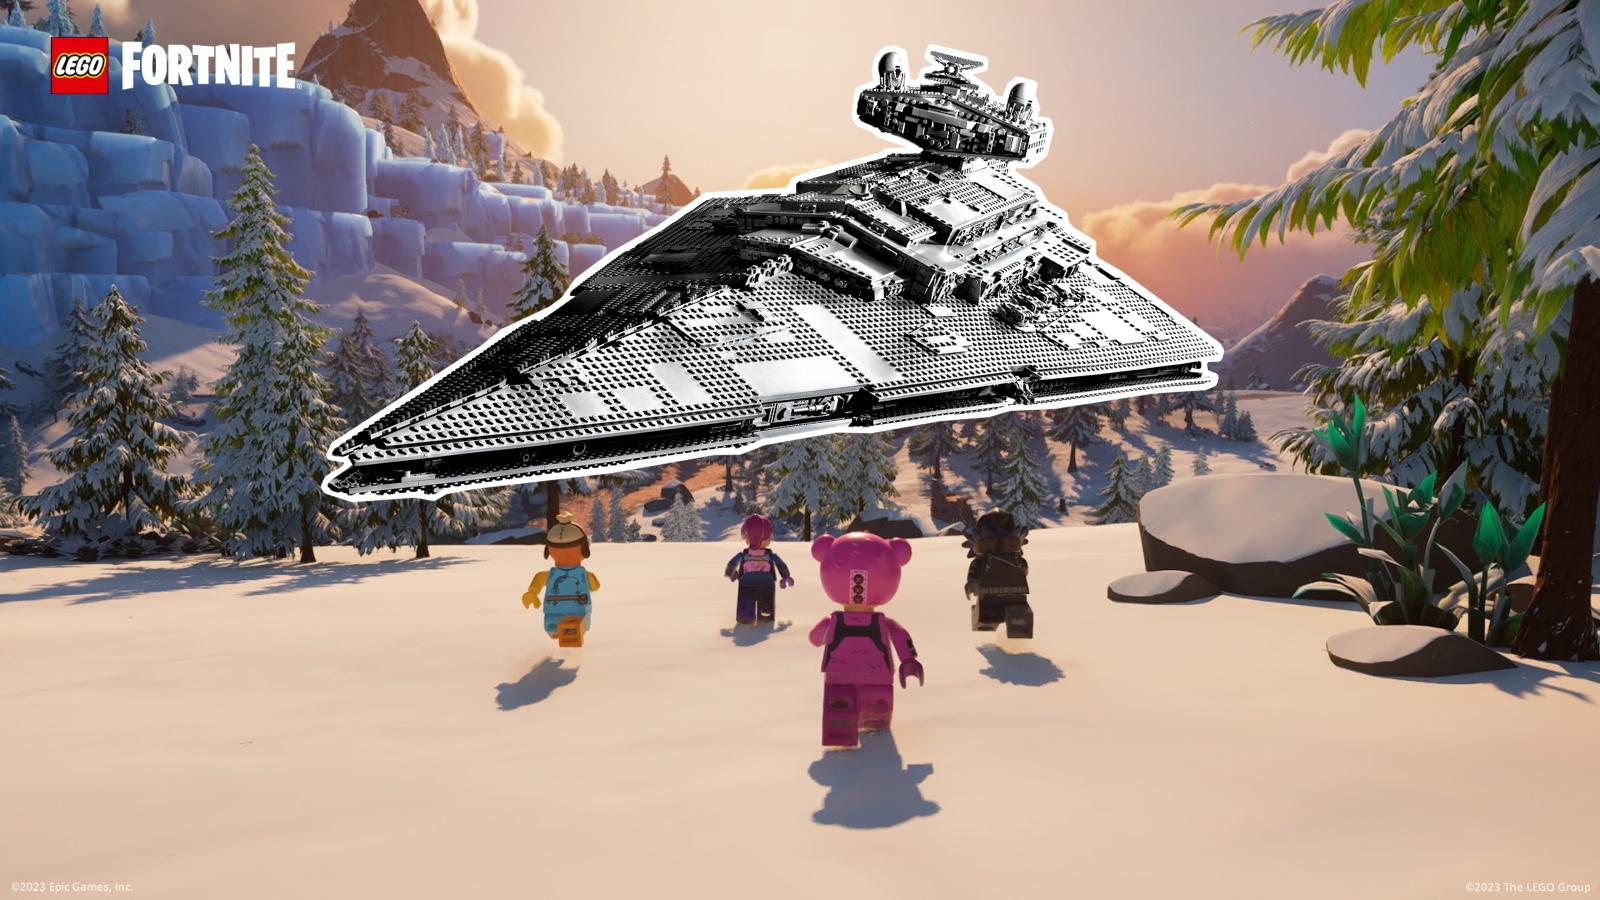 LEGO Fortnite Star Wars Star Destroyer